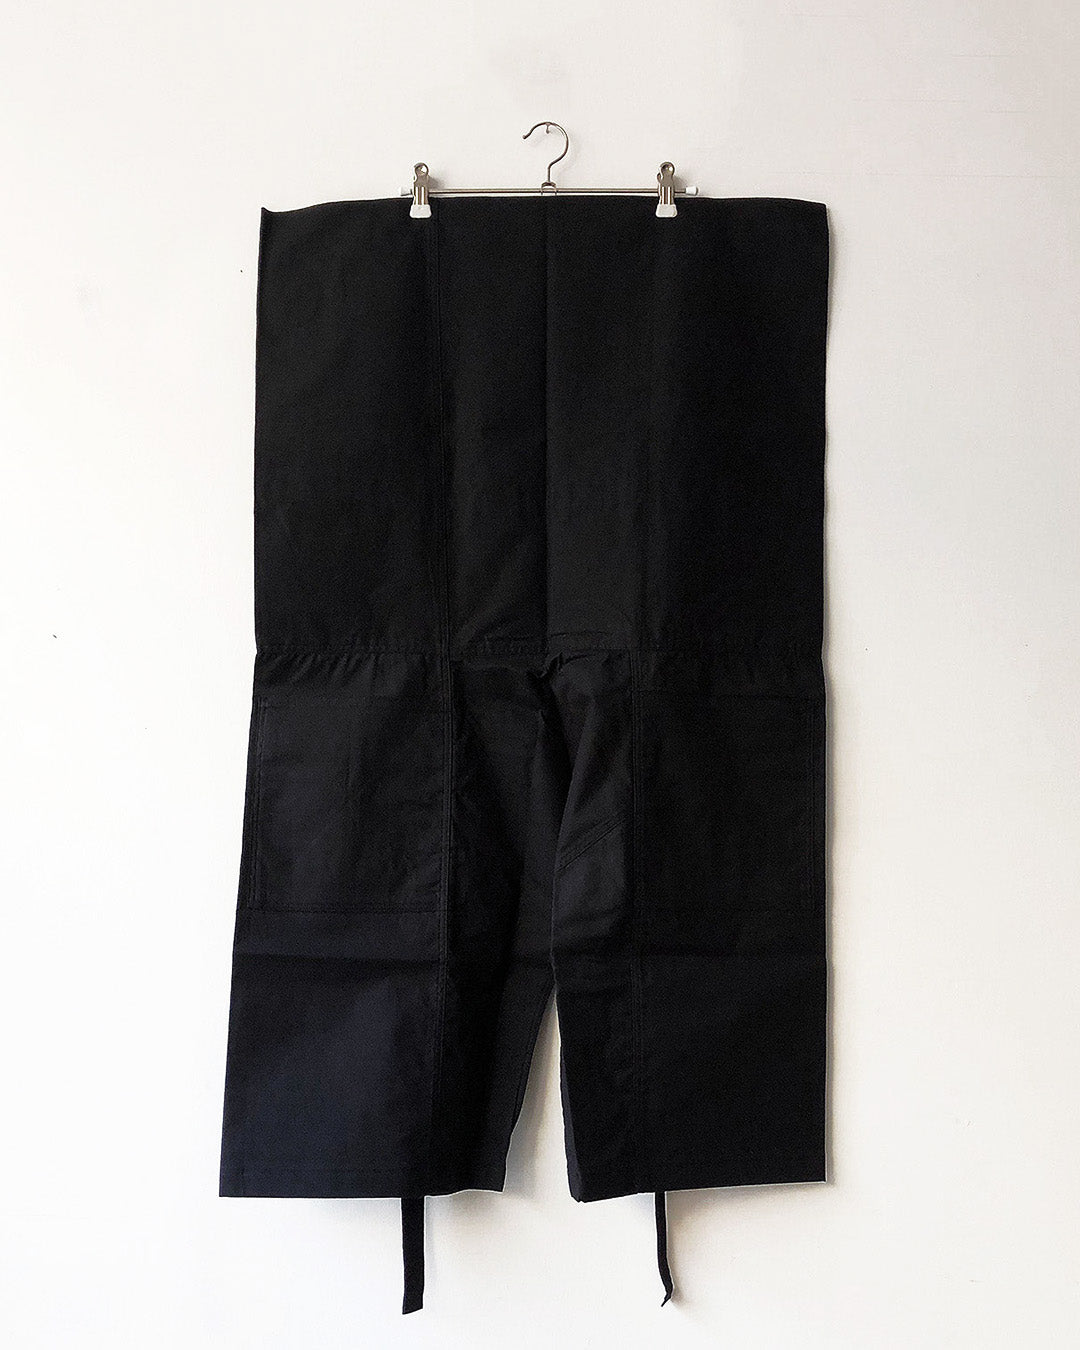 TUKI fisherman's shorts / black